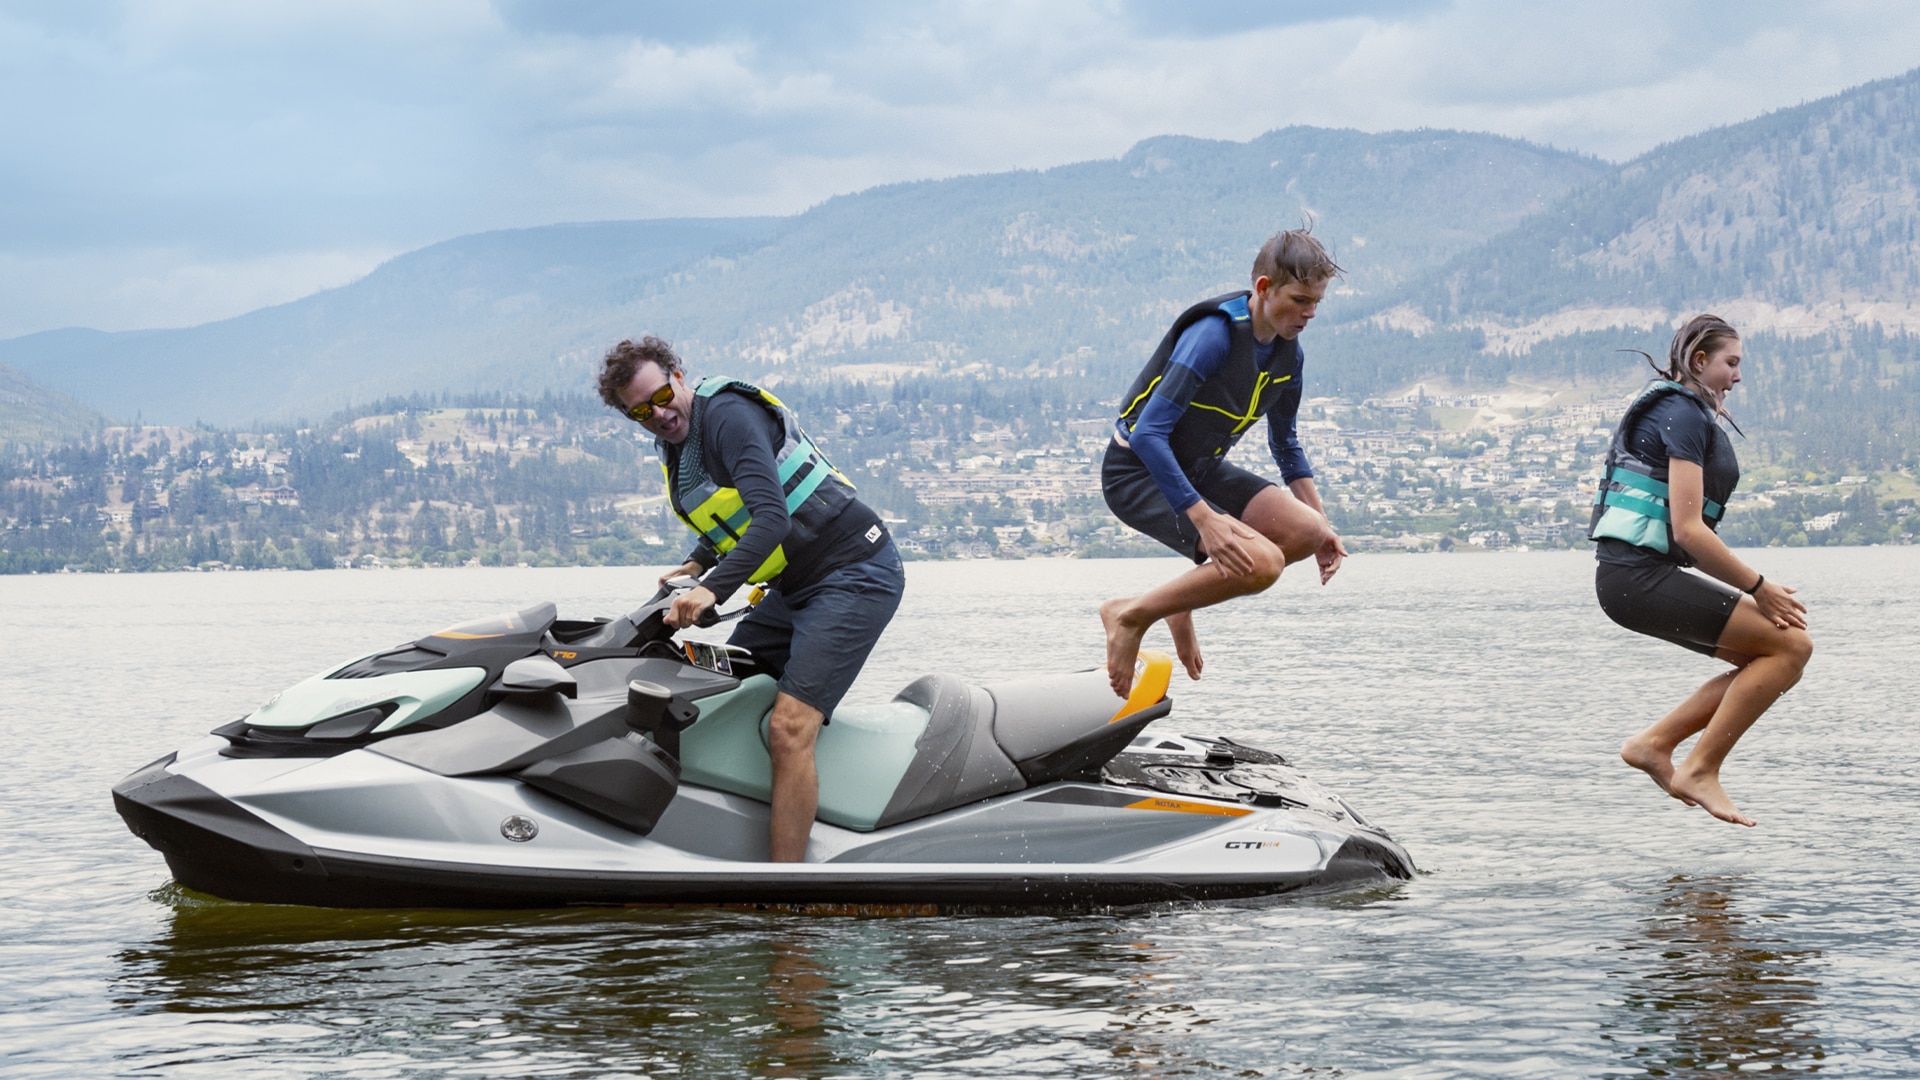 Riders jump off a Sea-Doo watercraft